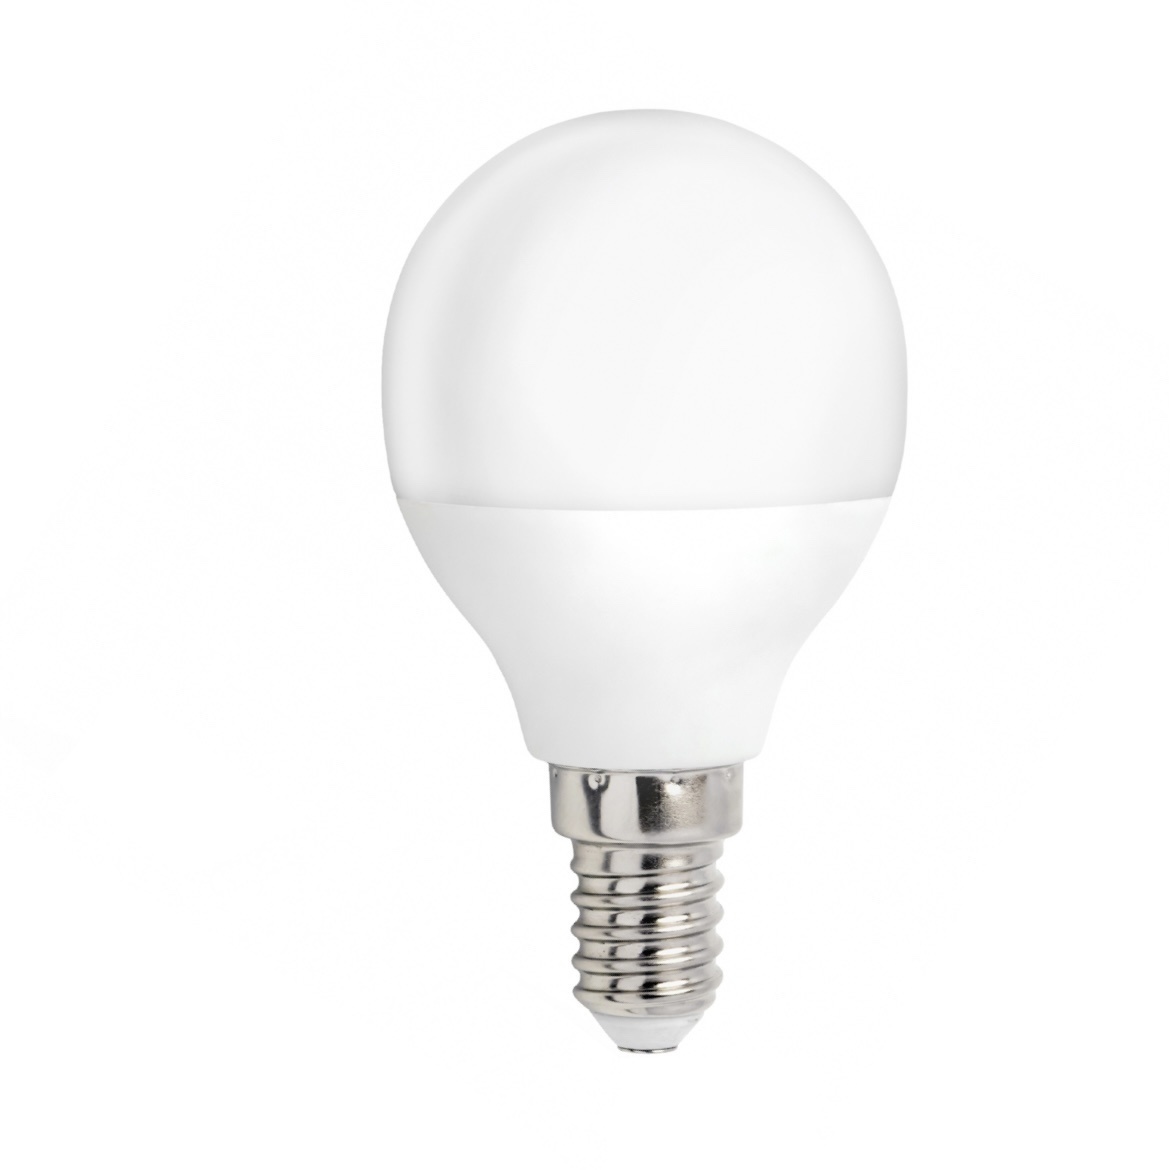 LED Lampe E14 4W 3000K Warmweiß - entspricht 25W - Ledleuchtendiscounter.de